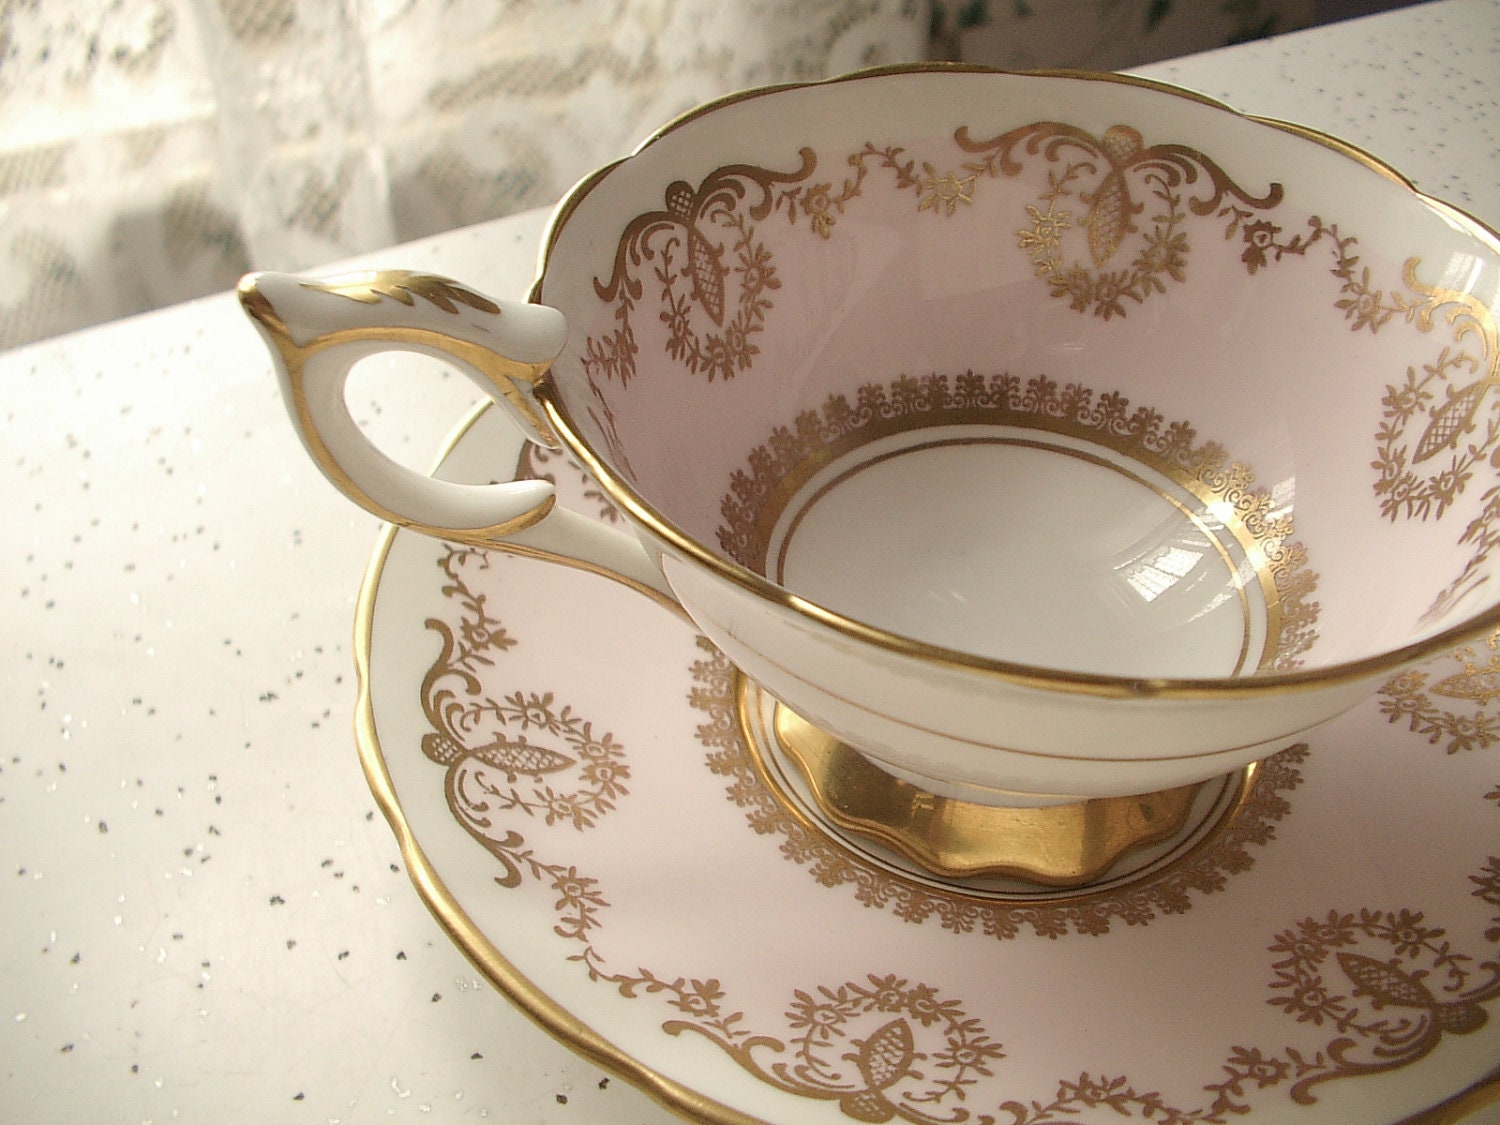 vintage pink and gold tea cup and saucer set, Royal Stafford English bone china tea set, art nouveau - ShoponSherman